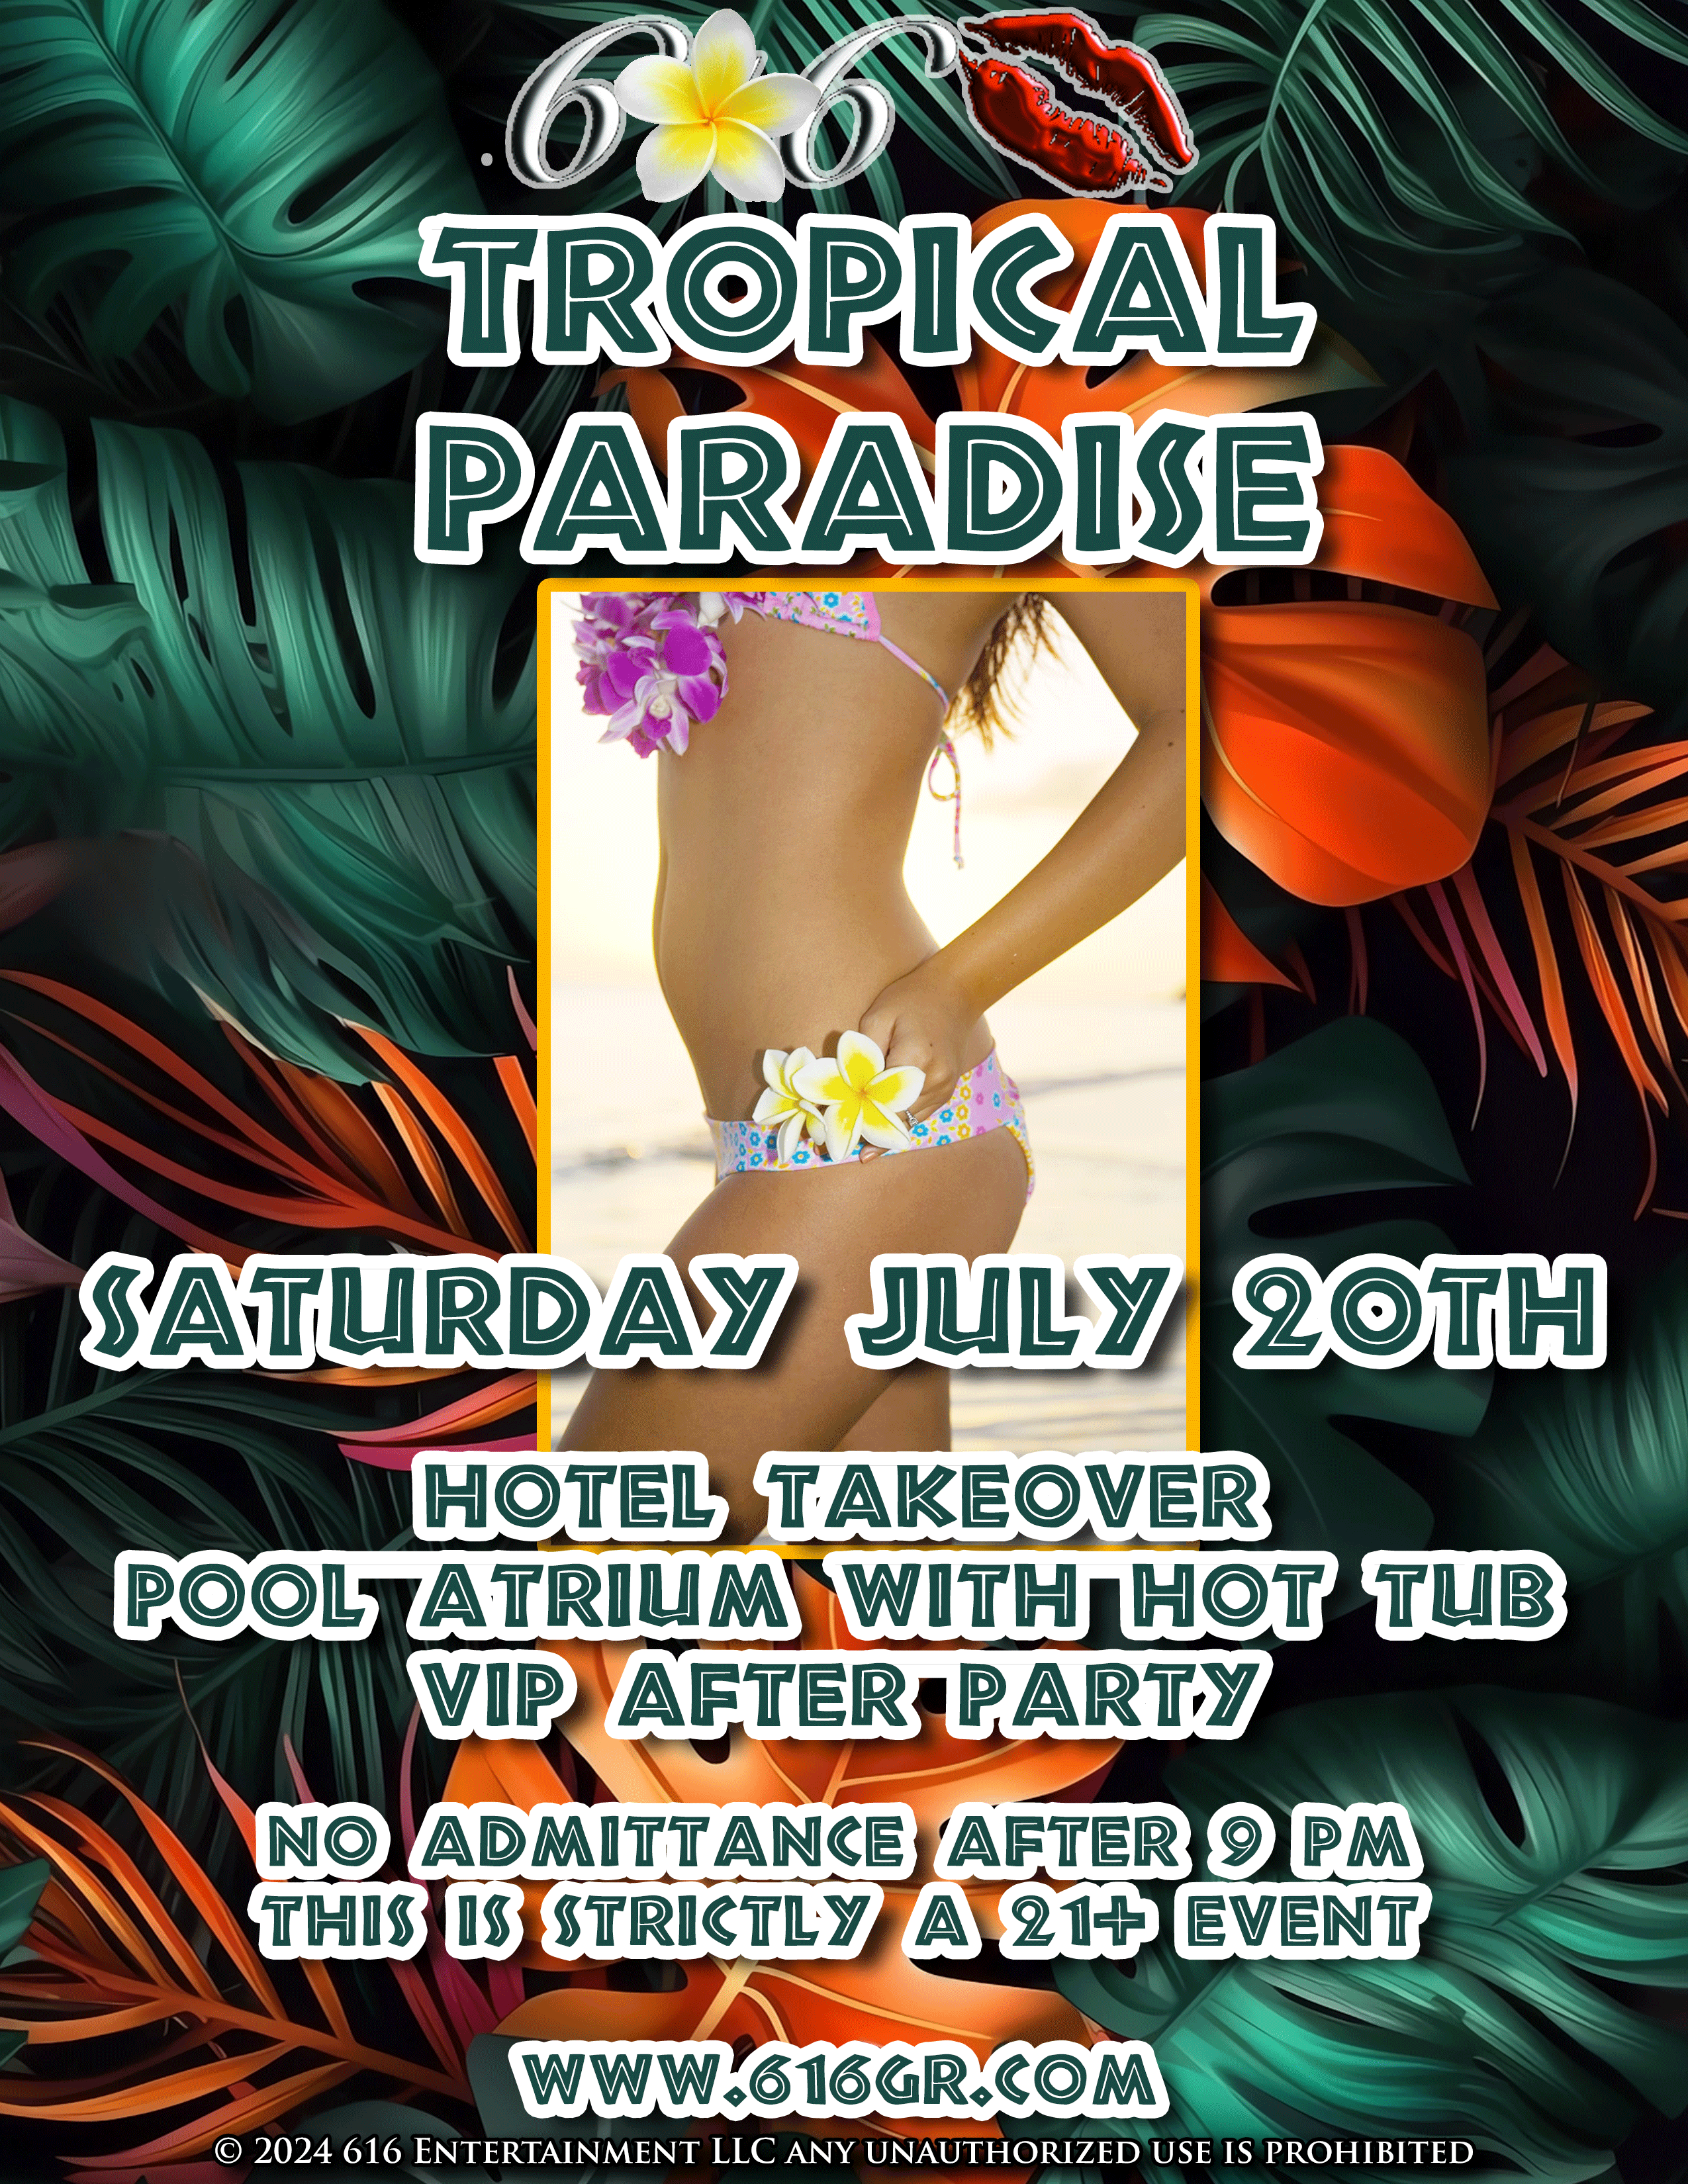 616 Tropical Paradise, Saturday July 20th.